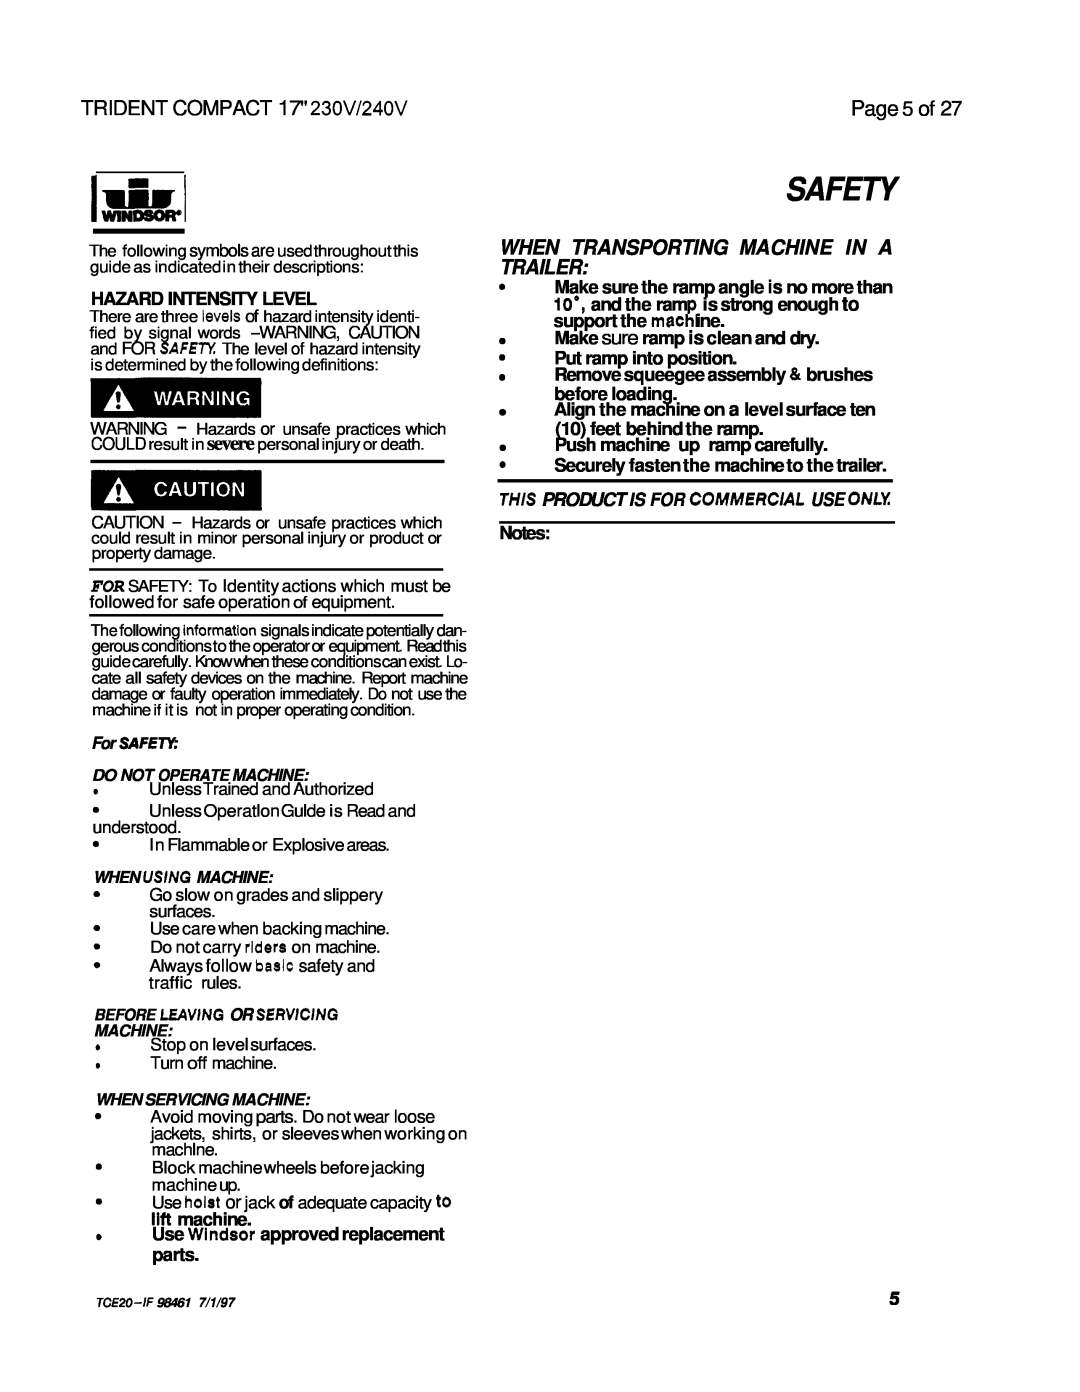 Windsor 240V, 230V Safety, When Transporting Machine In A Trailer, Page 5 of, Hazard Intensity Level, lltt machine 